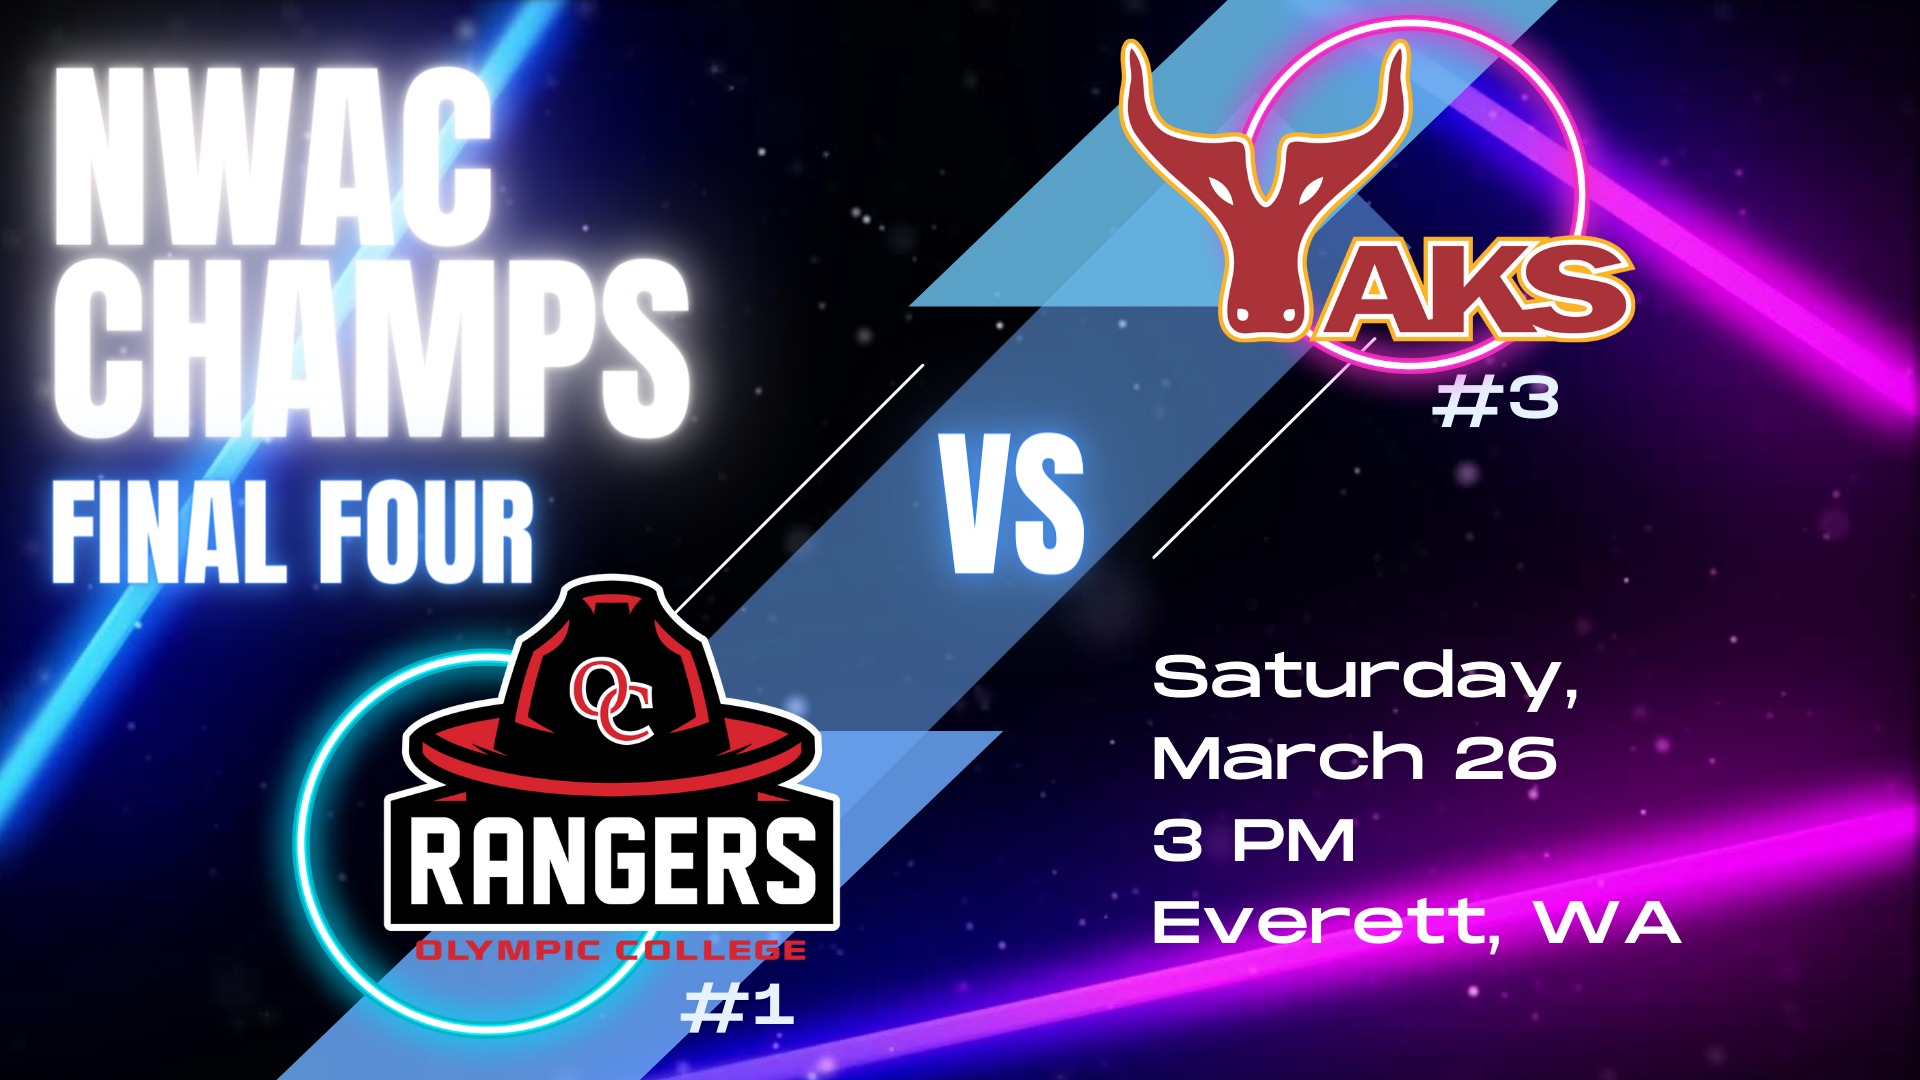 NWAC Champs Final Four. Olympic College Ranger logo vs Yakima Valley Yaks logo. Saturday March 26, 3pm, Everett, WA